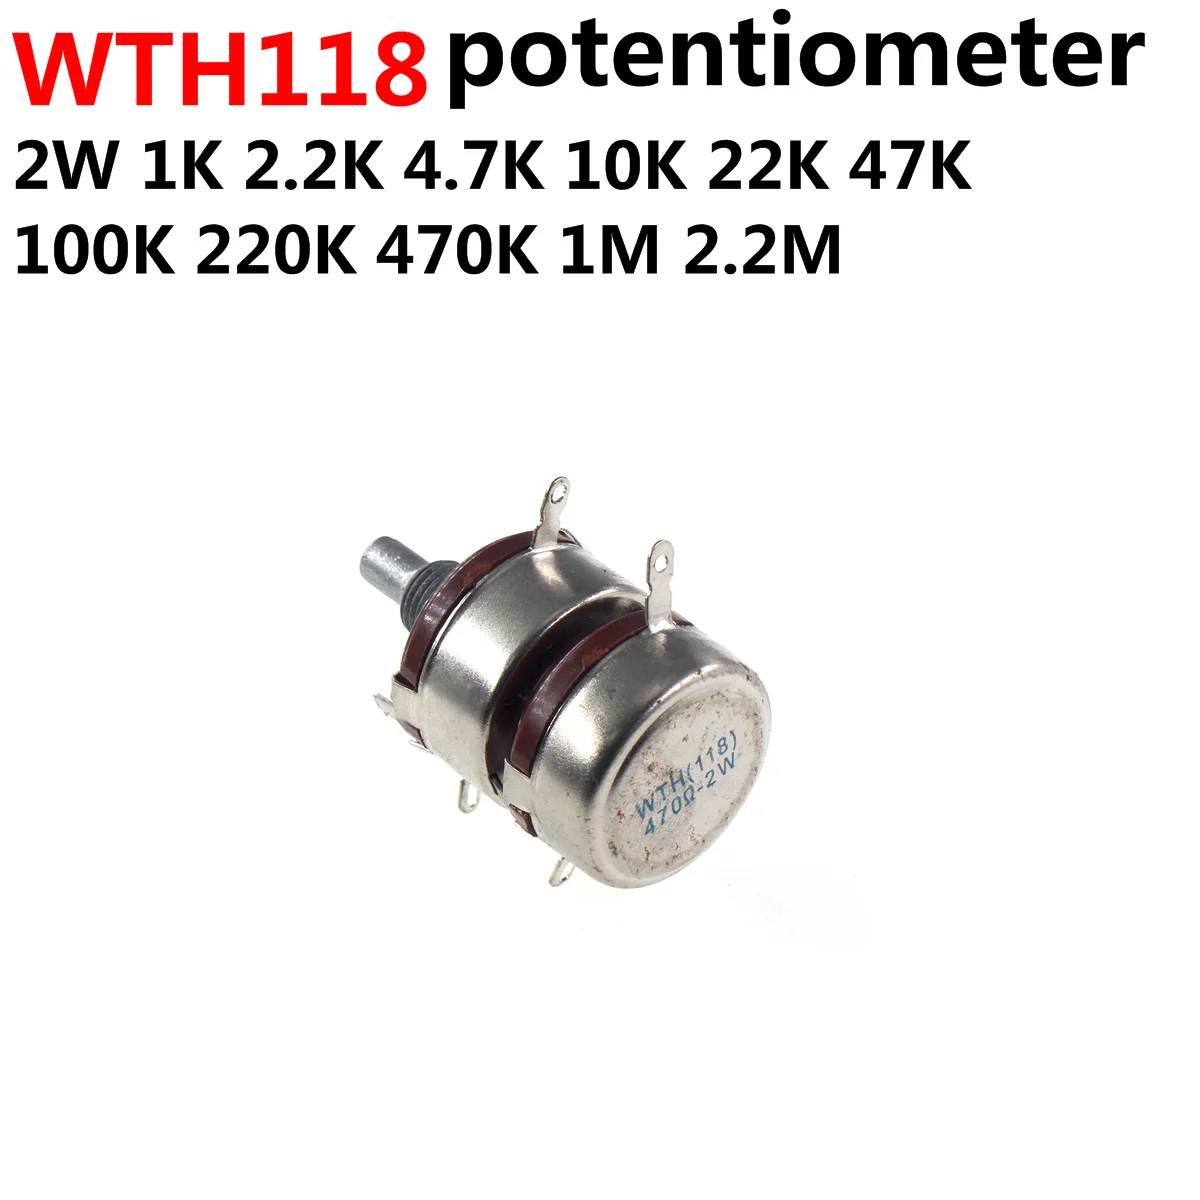 

WTH118-2 2W 1A duplex Potentiometer double WTH118-1A 2W 470R 1K 2.2K 2K2 10K 22K 47K 100K 150K 220K 330K 470K 500K 560K 680K